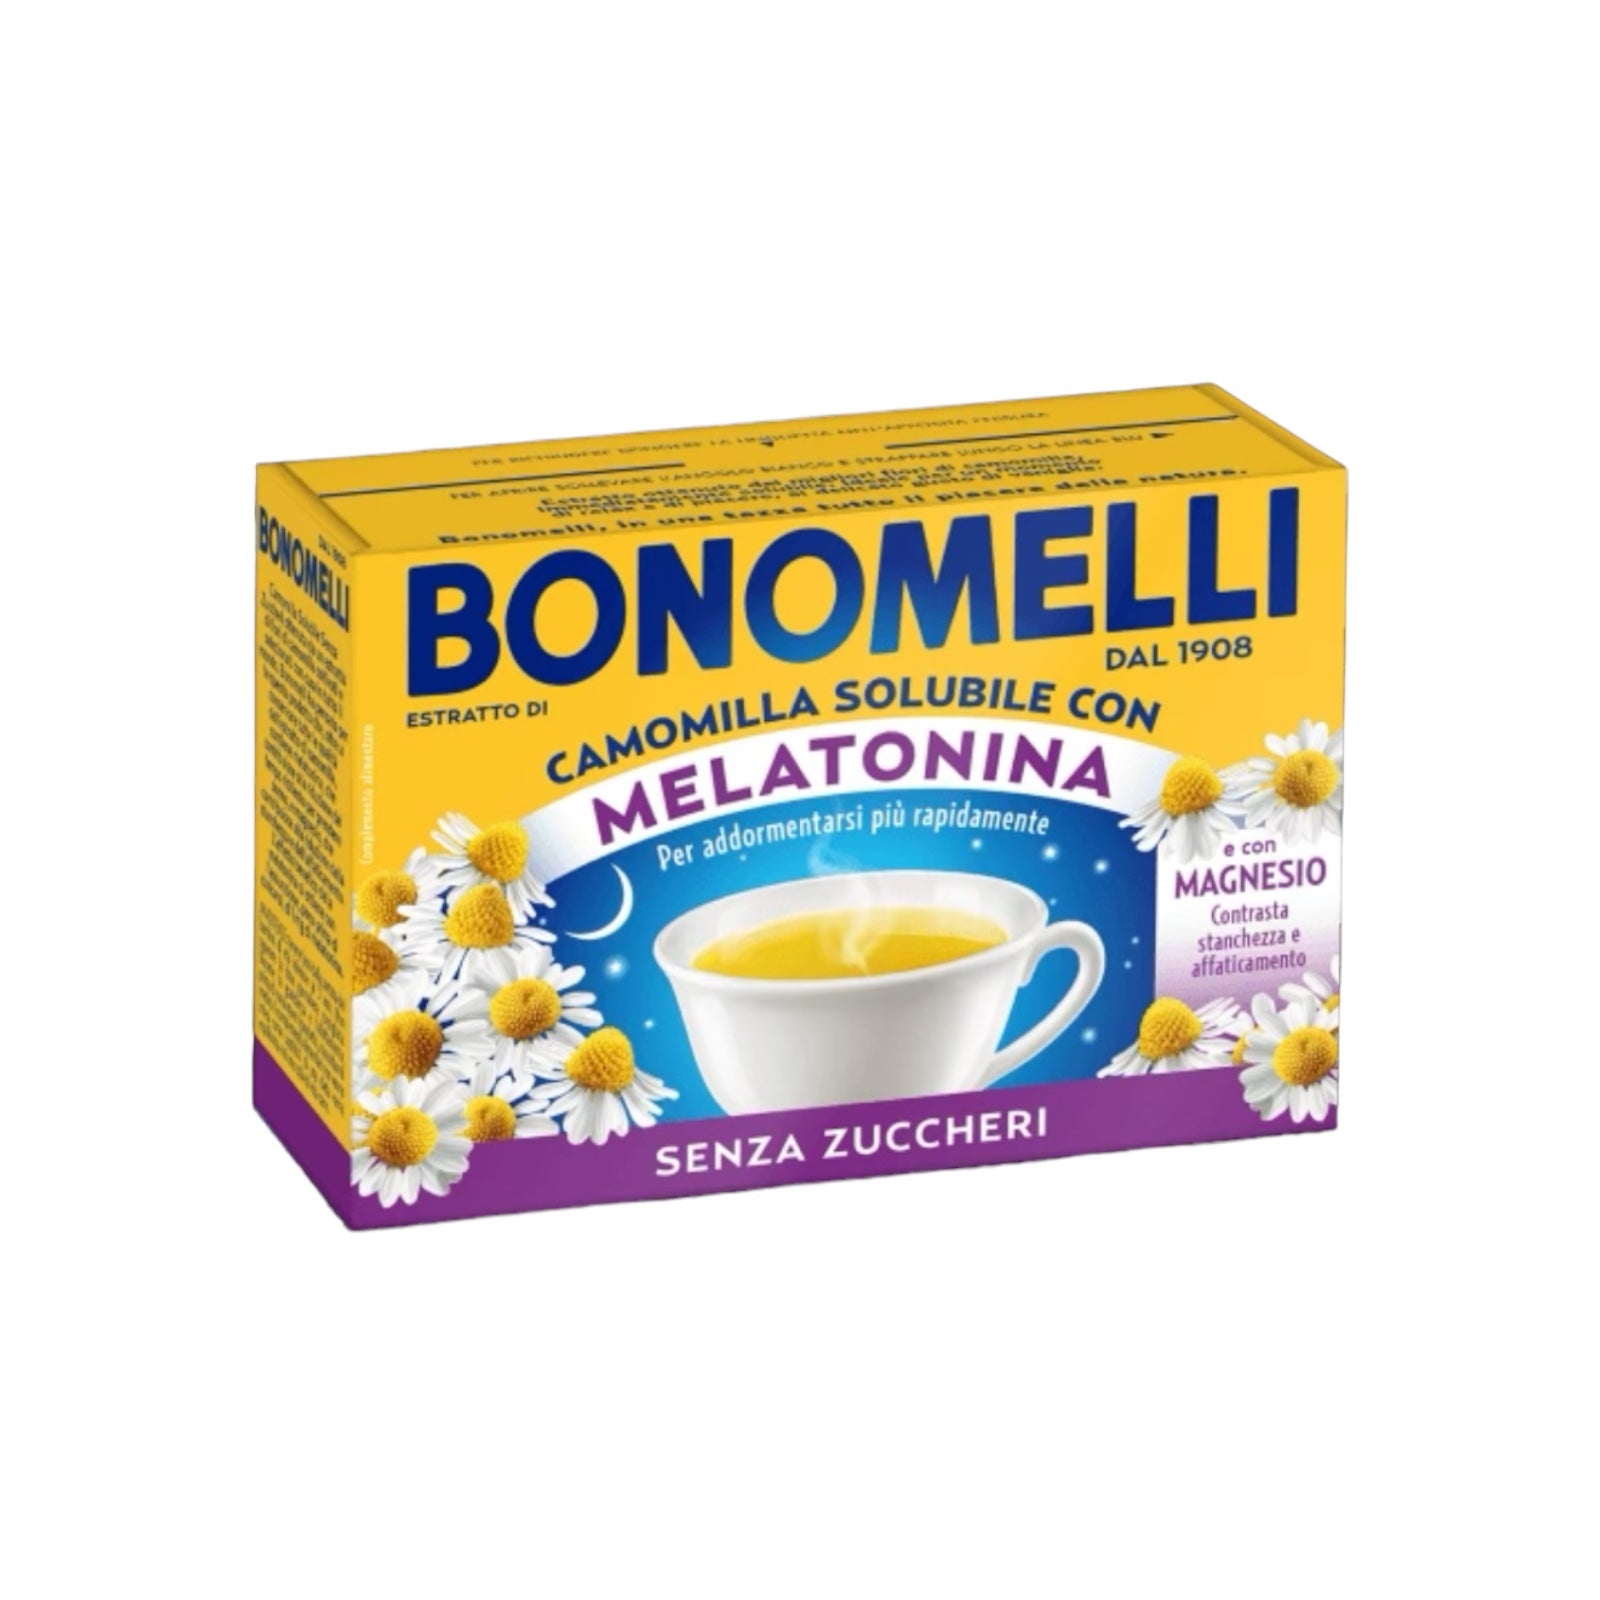 Bononelli SolubleChamomile With Melatonin And Magnesium
16 bags 72g